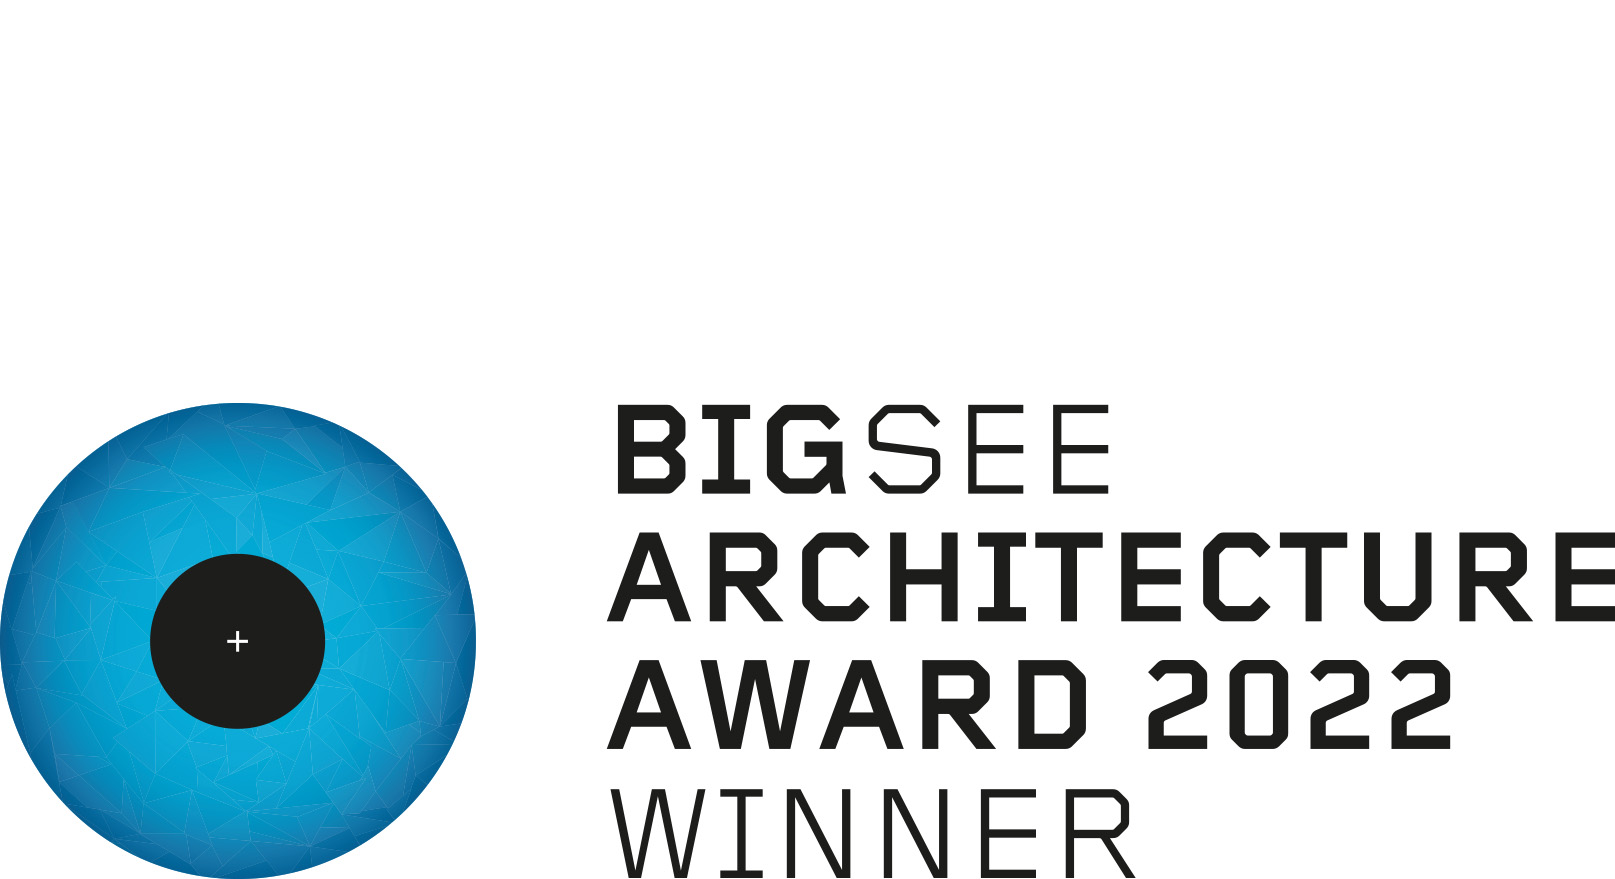 BigSEE Architecture Award 2022